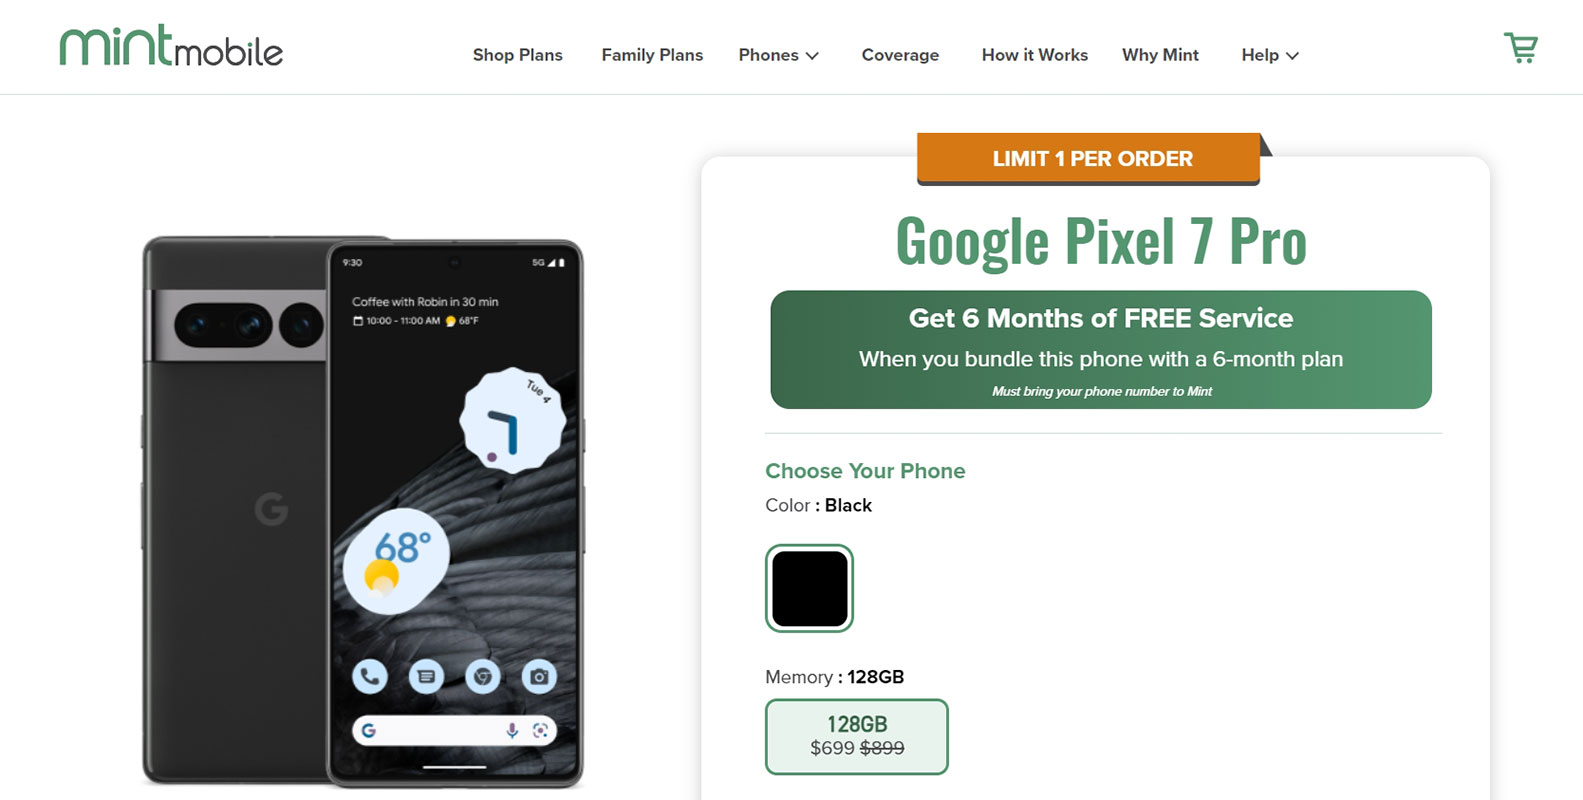 Google Pixel 7 Pro Mint Mobile Price Range